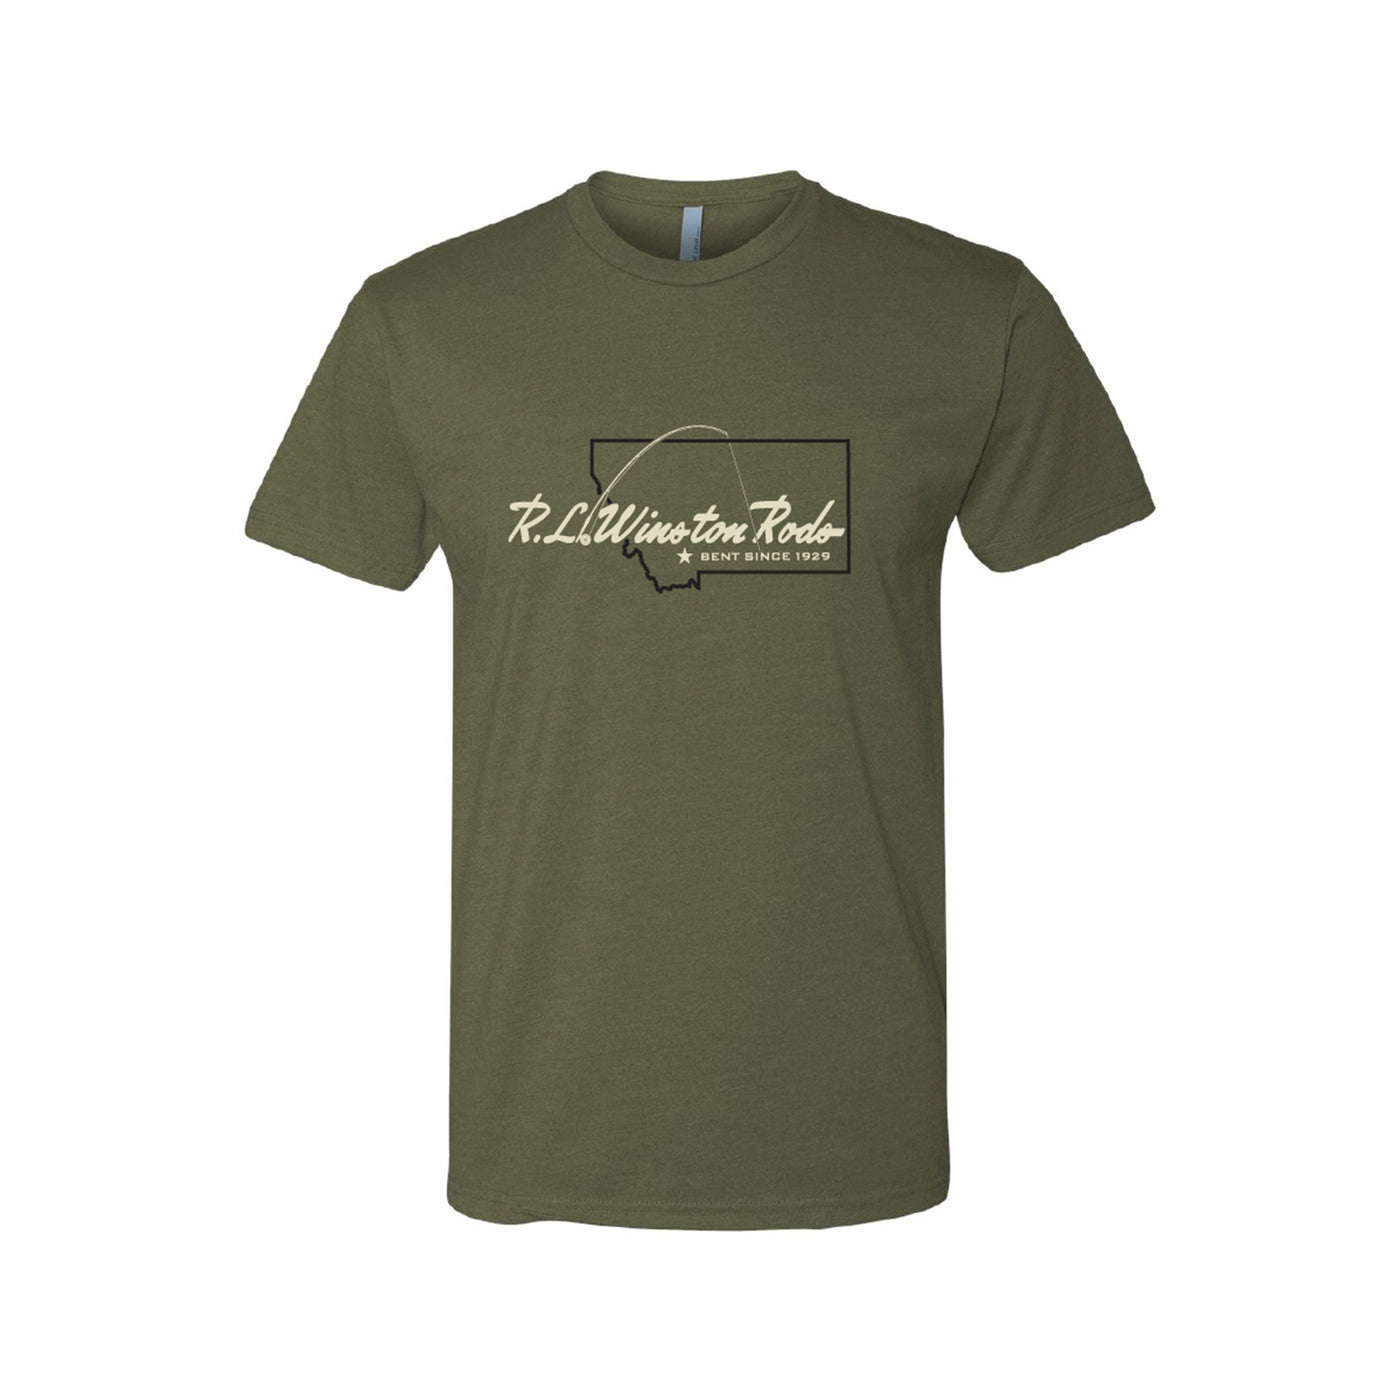 RL Winston Montana T-Shirt